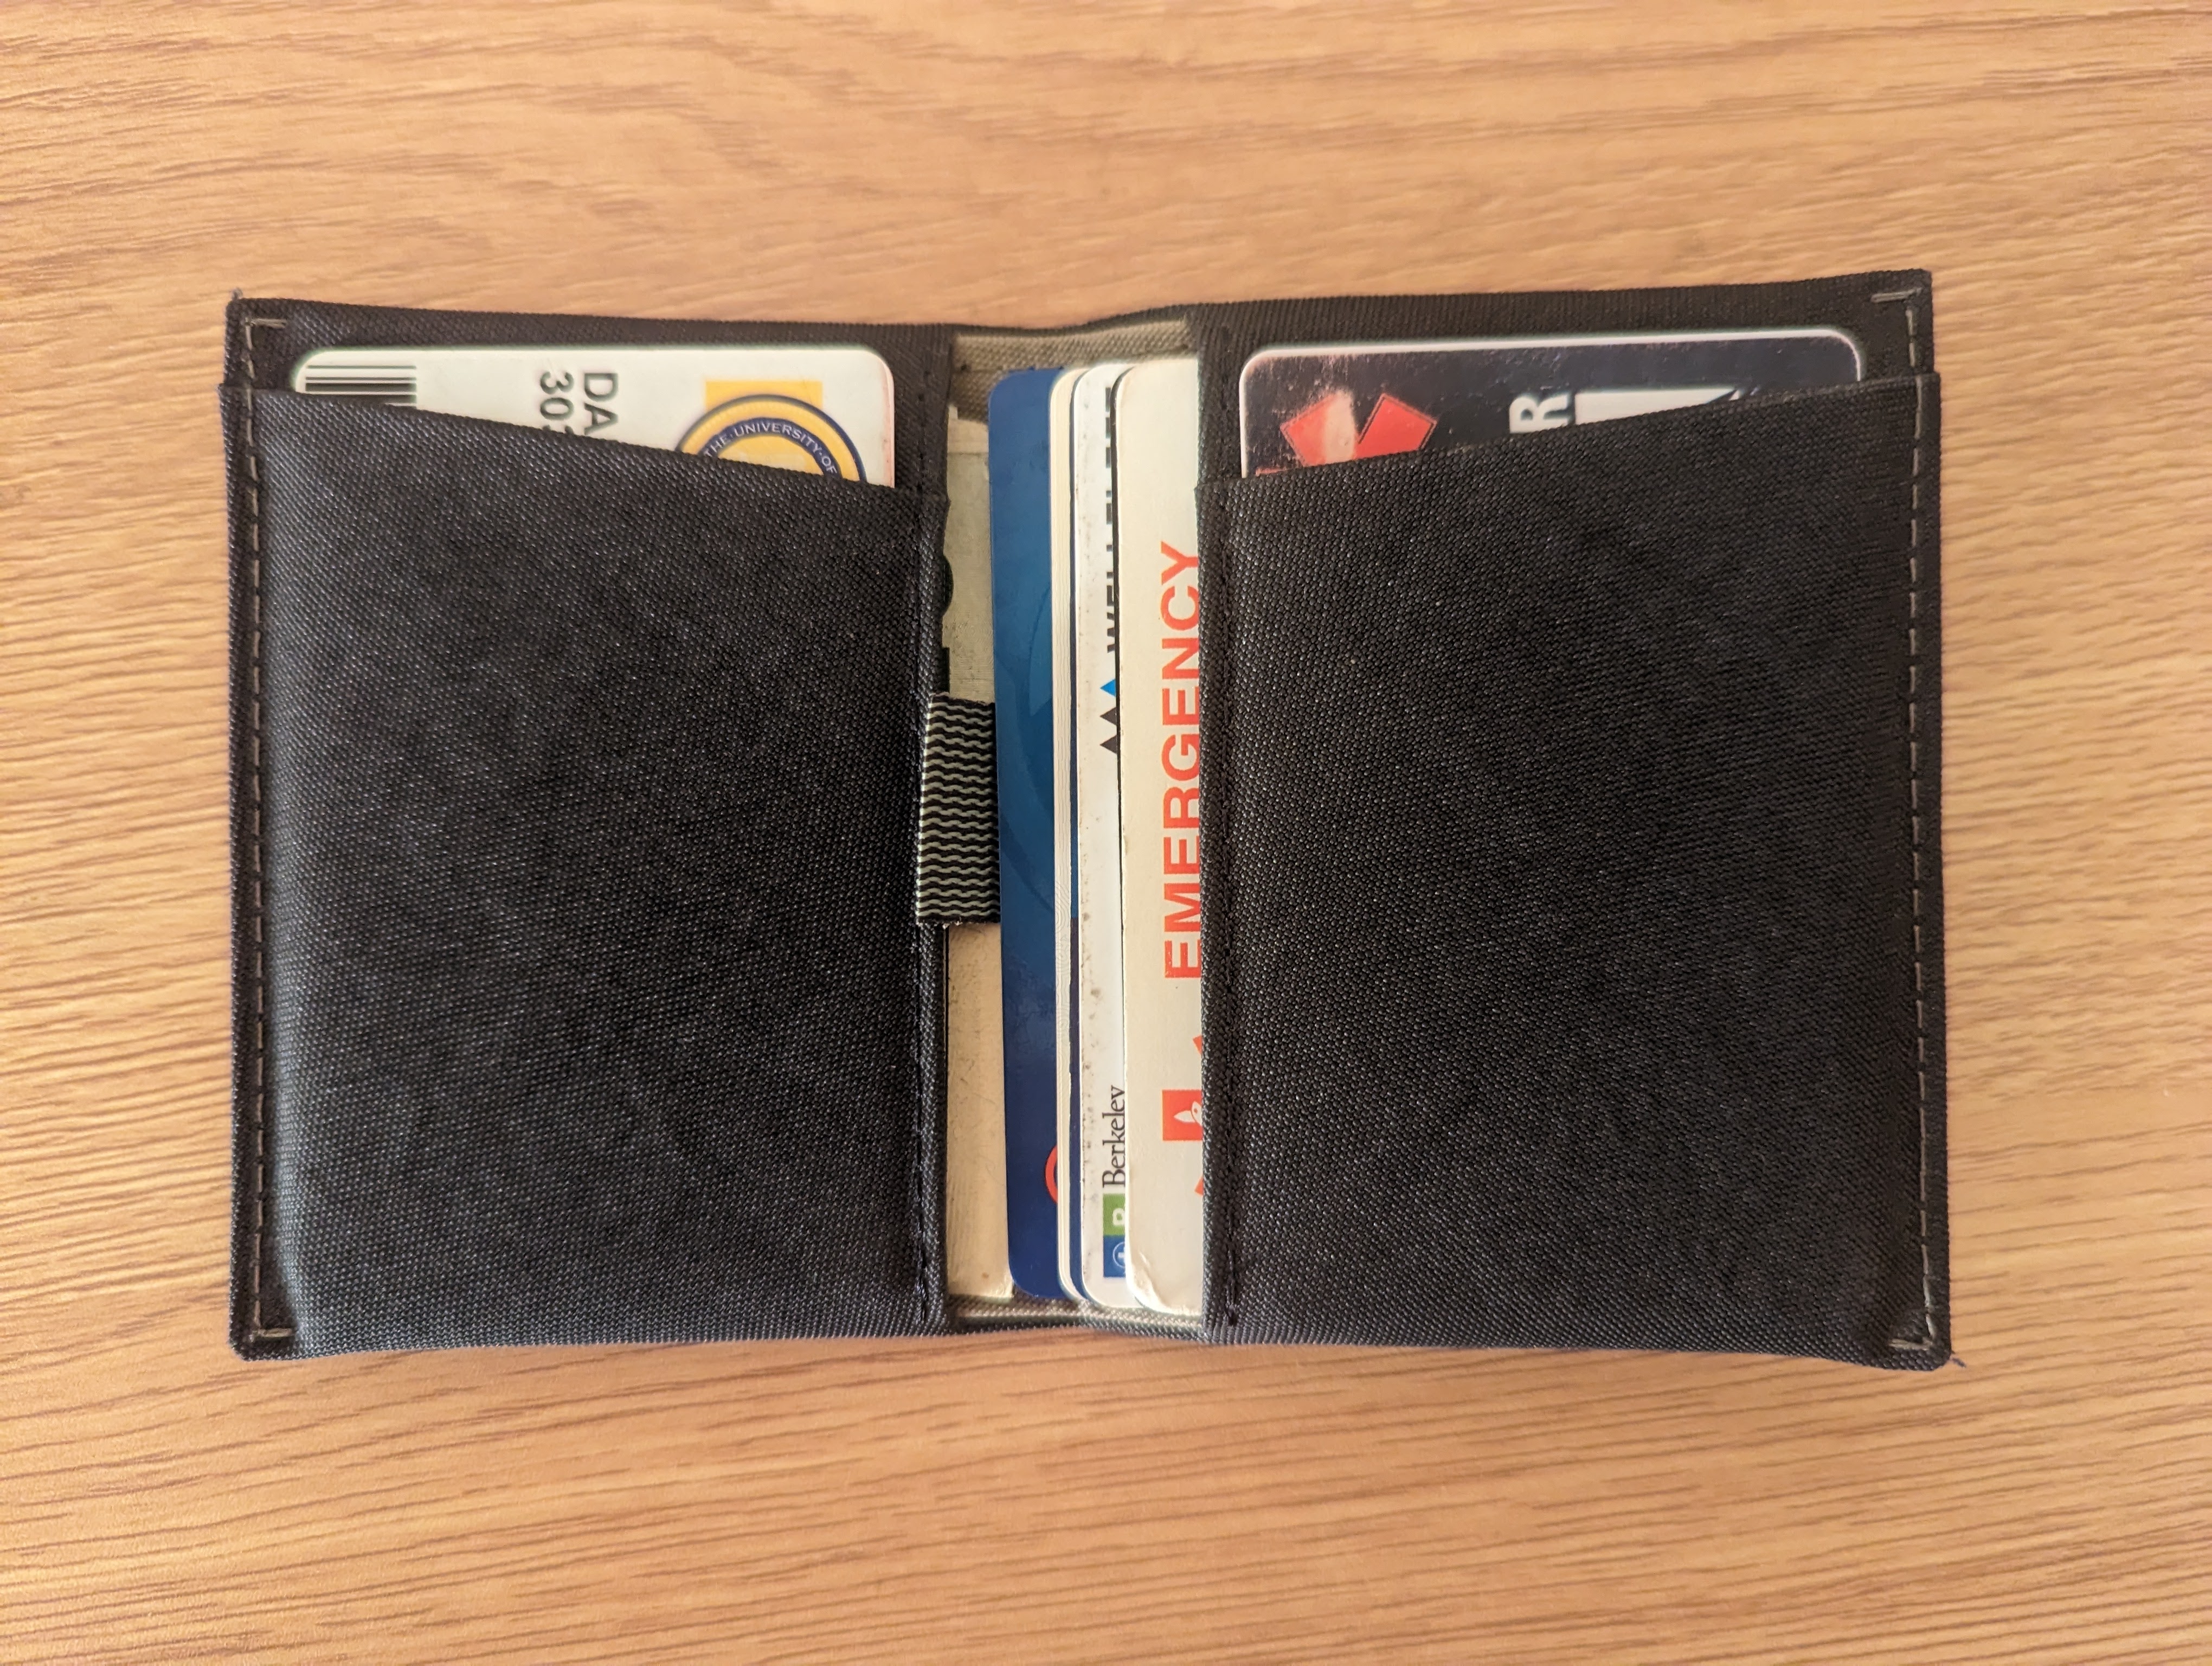 Wallet cards revealed